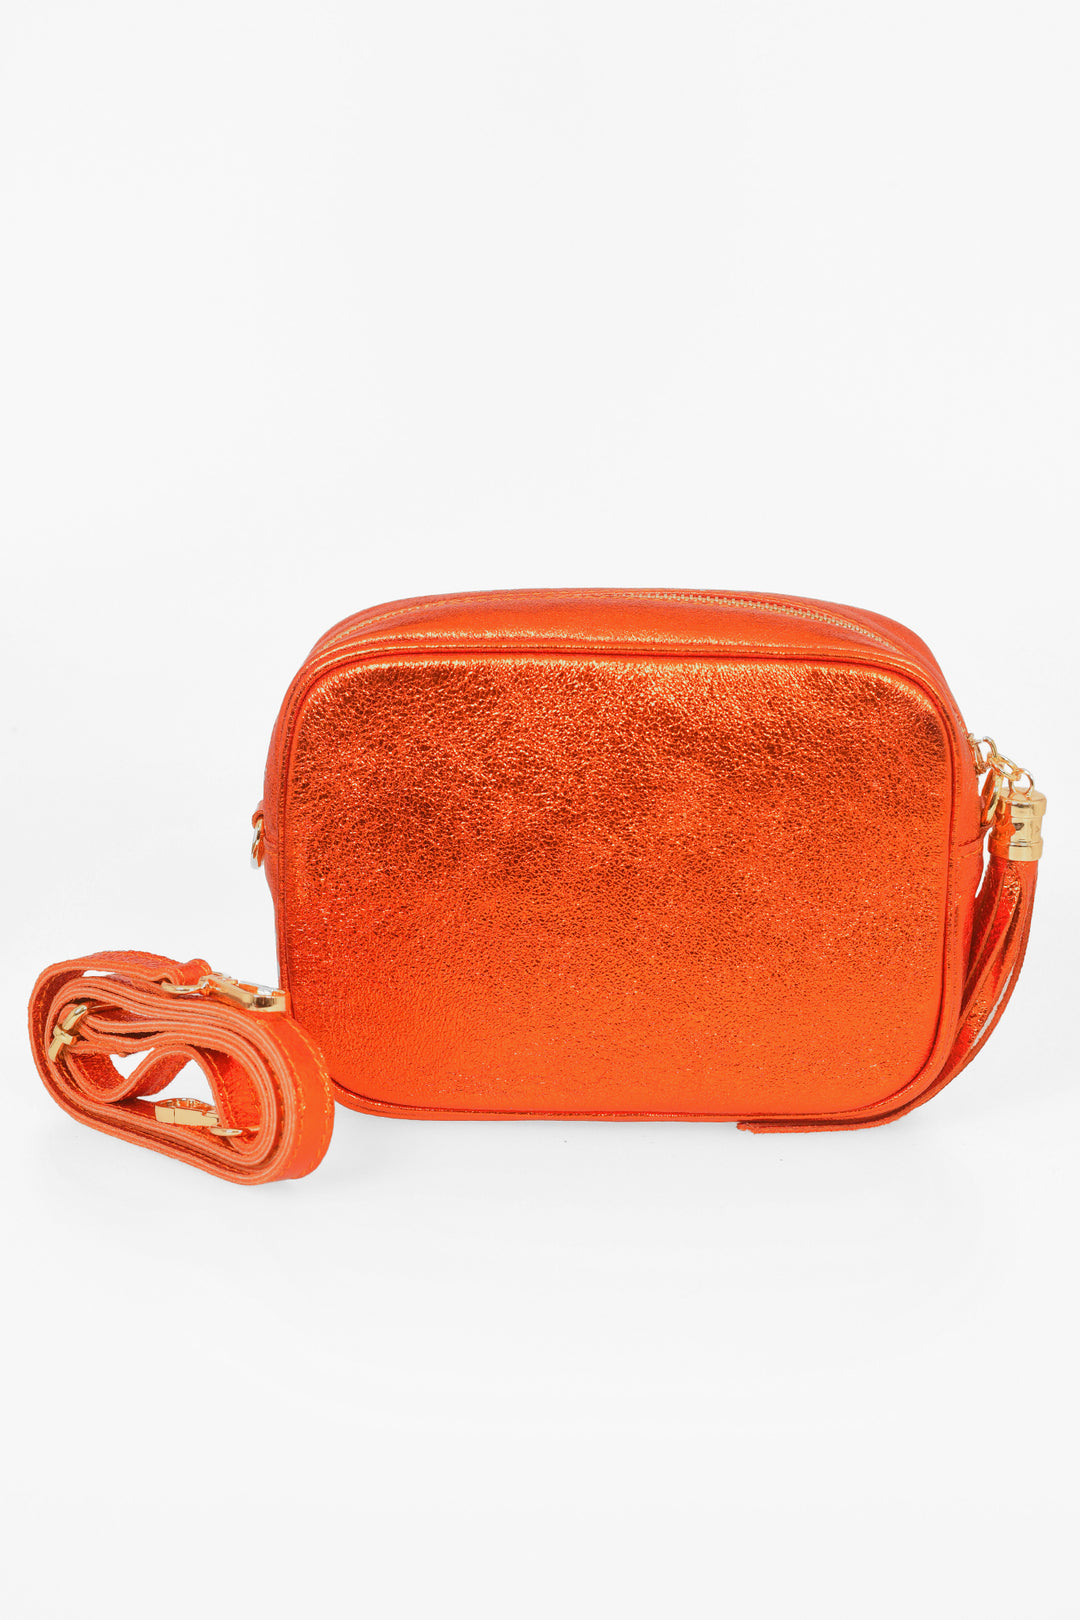 Metallic Burnt Orange Genuine Italian Leather Camera Bag